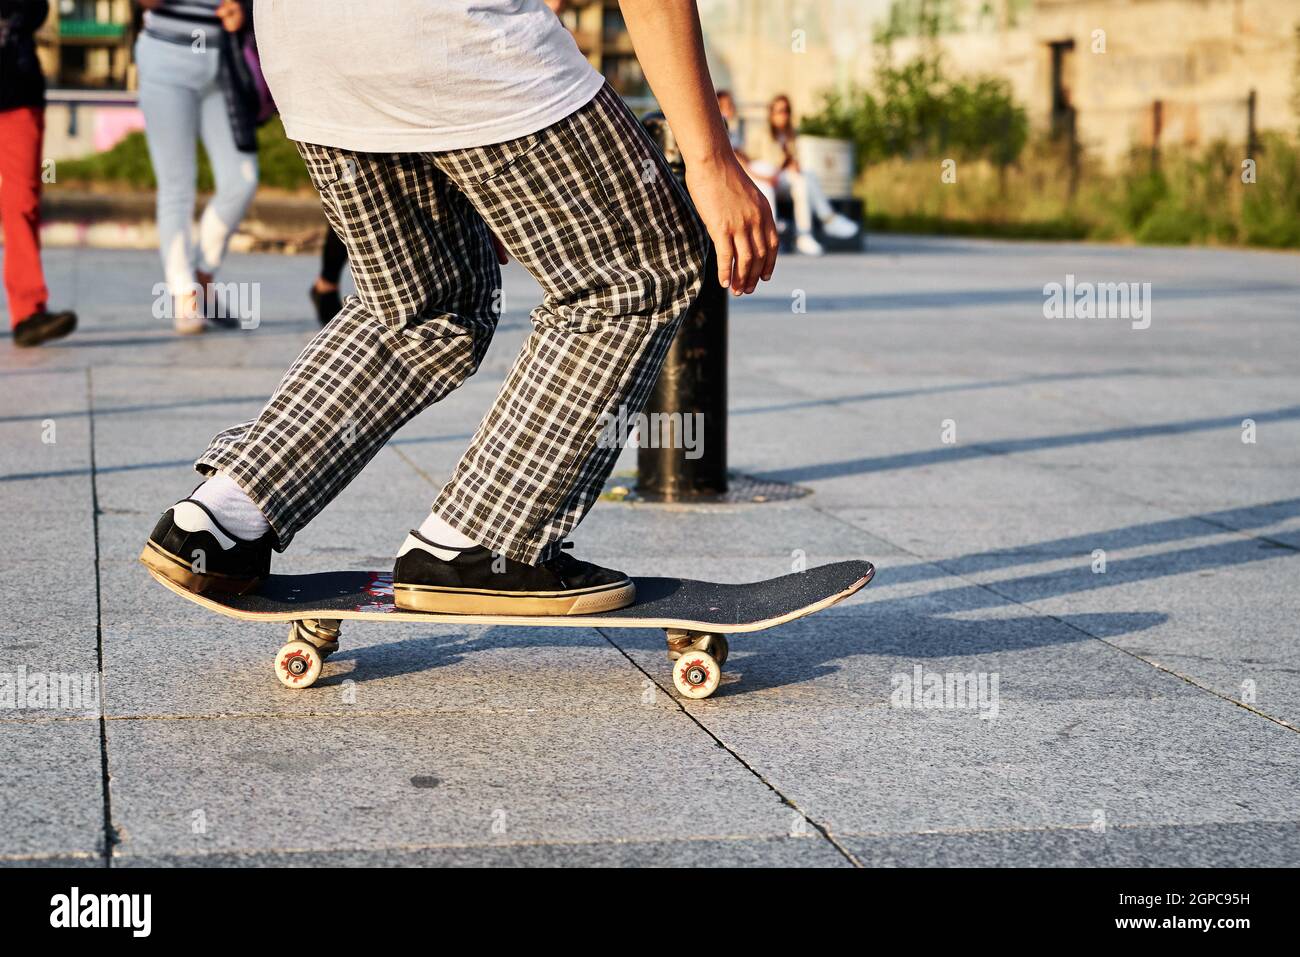 Skateboarder ride on skateboard at city street. Scater practice skate board  tricks at skatepark. Teenager extreme sport Stock Photo - Alamy